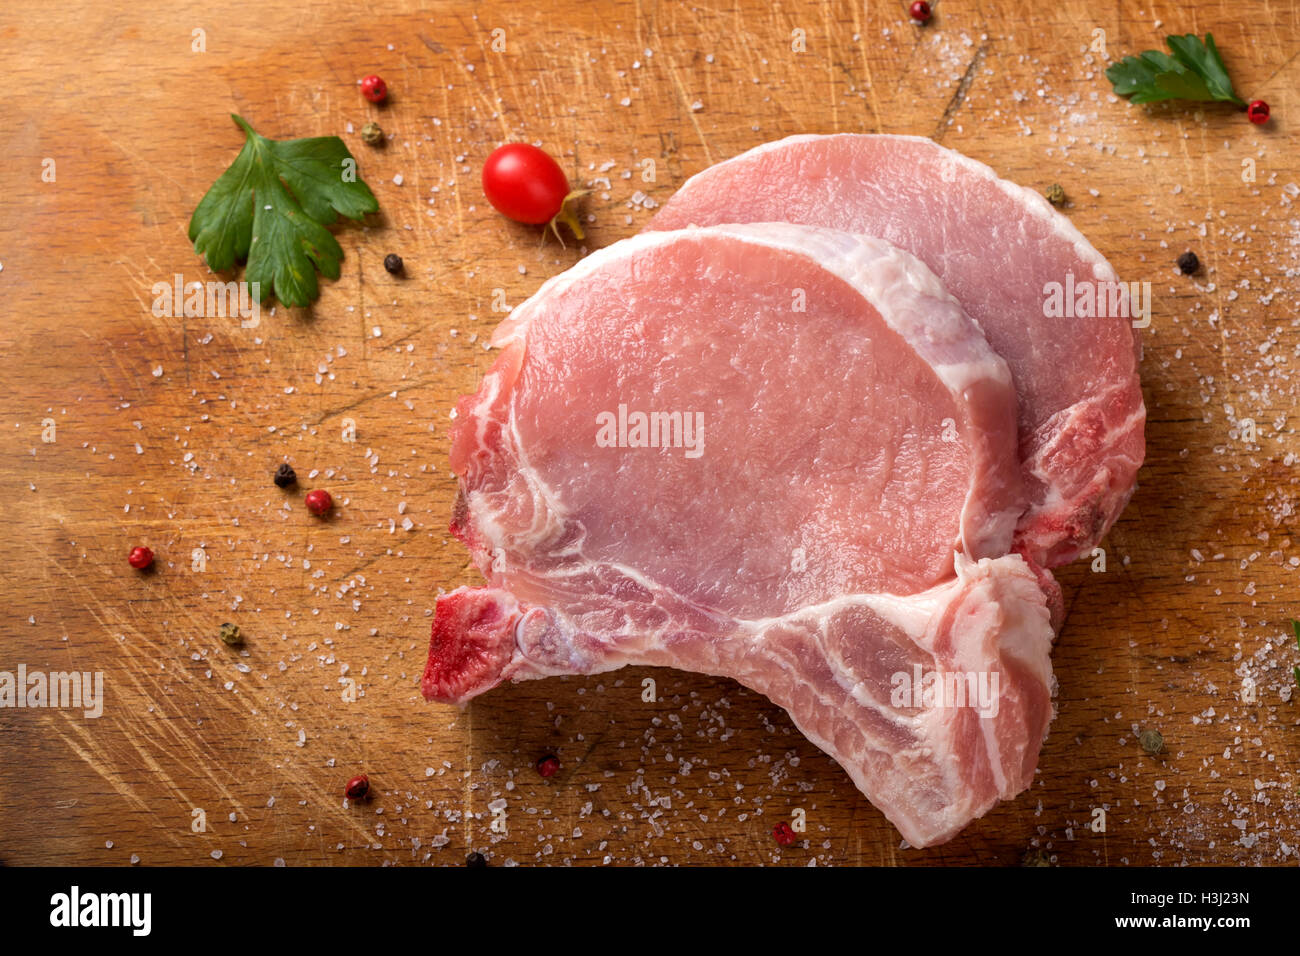 Fresh raw pork chops on a cutting board with herbs Stock Photo